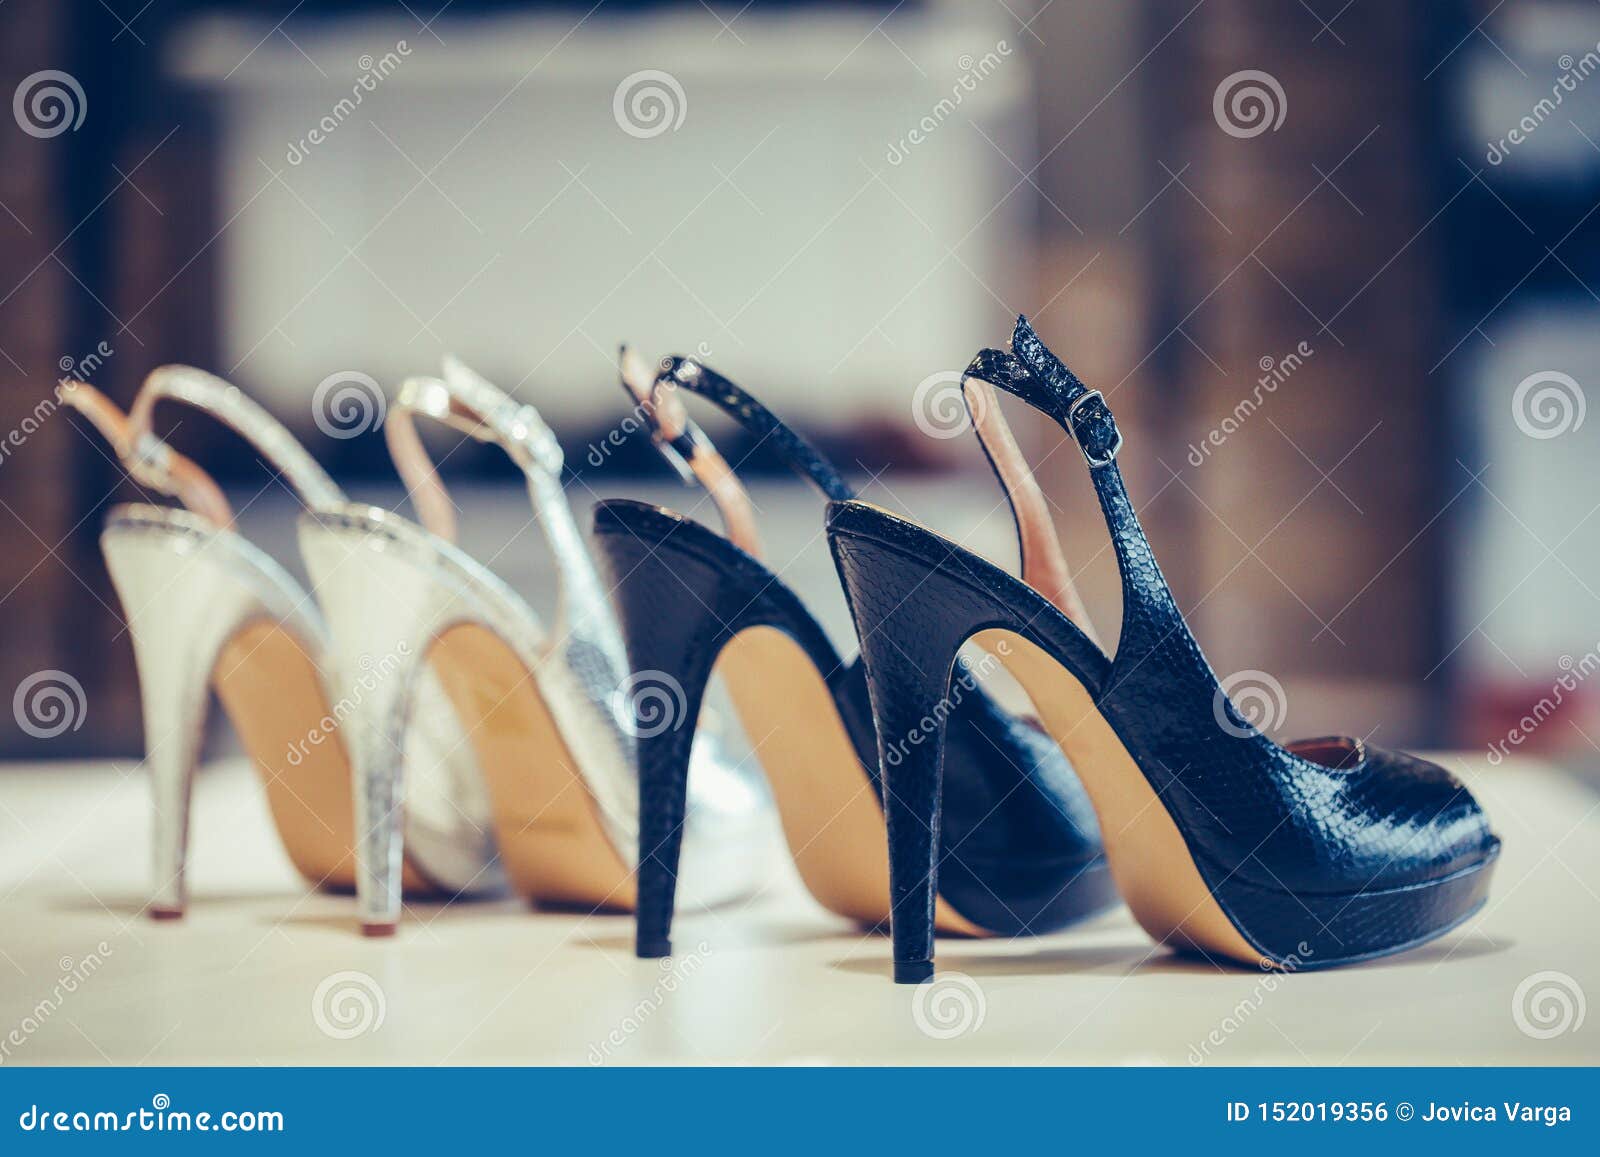 photo ashley seawell | DustJacket | Wedding shoes, Me too shoes, Heels